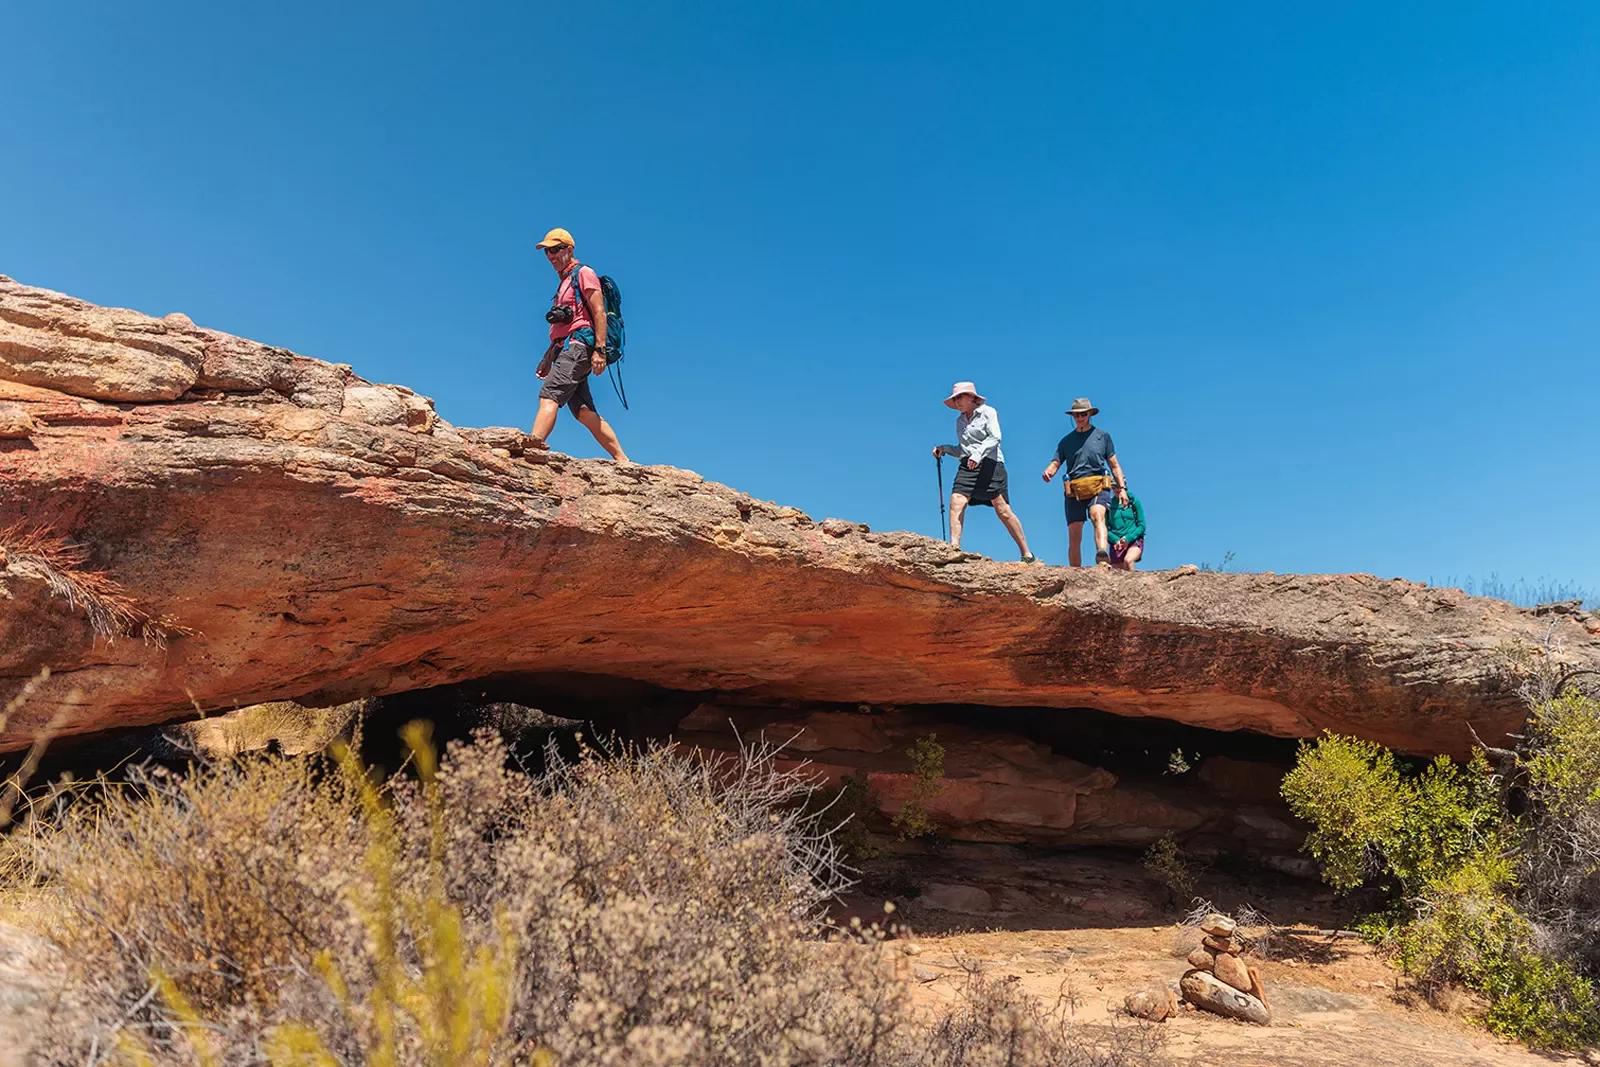 Three people hike over a rocky ledge